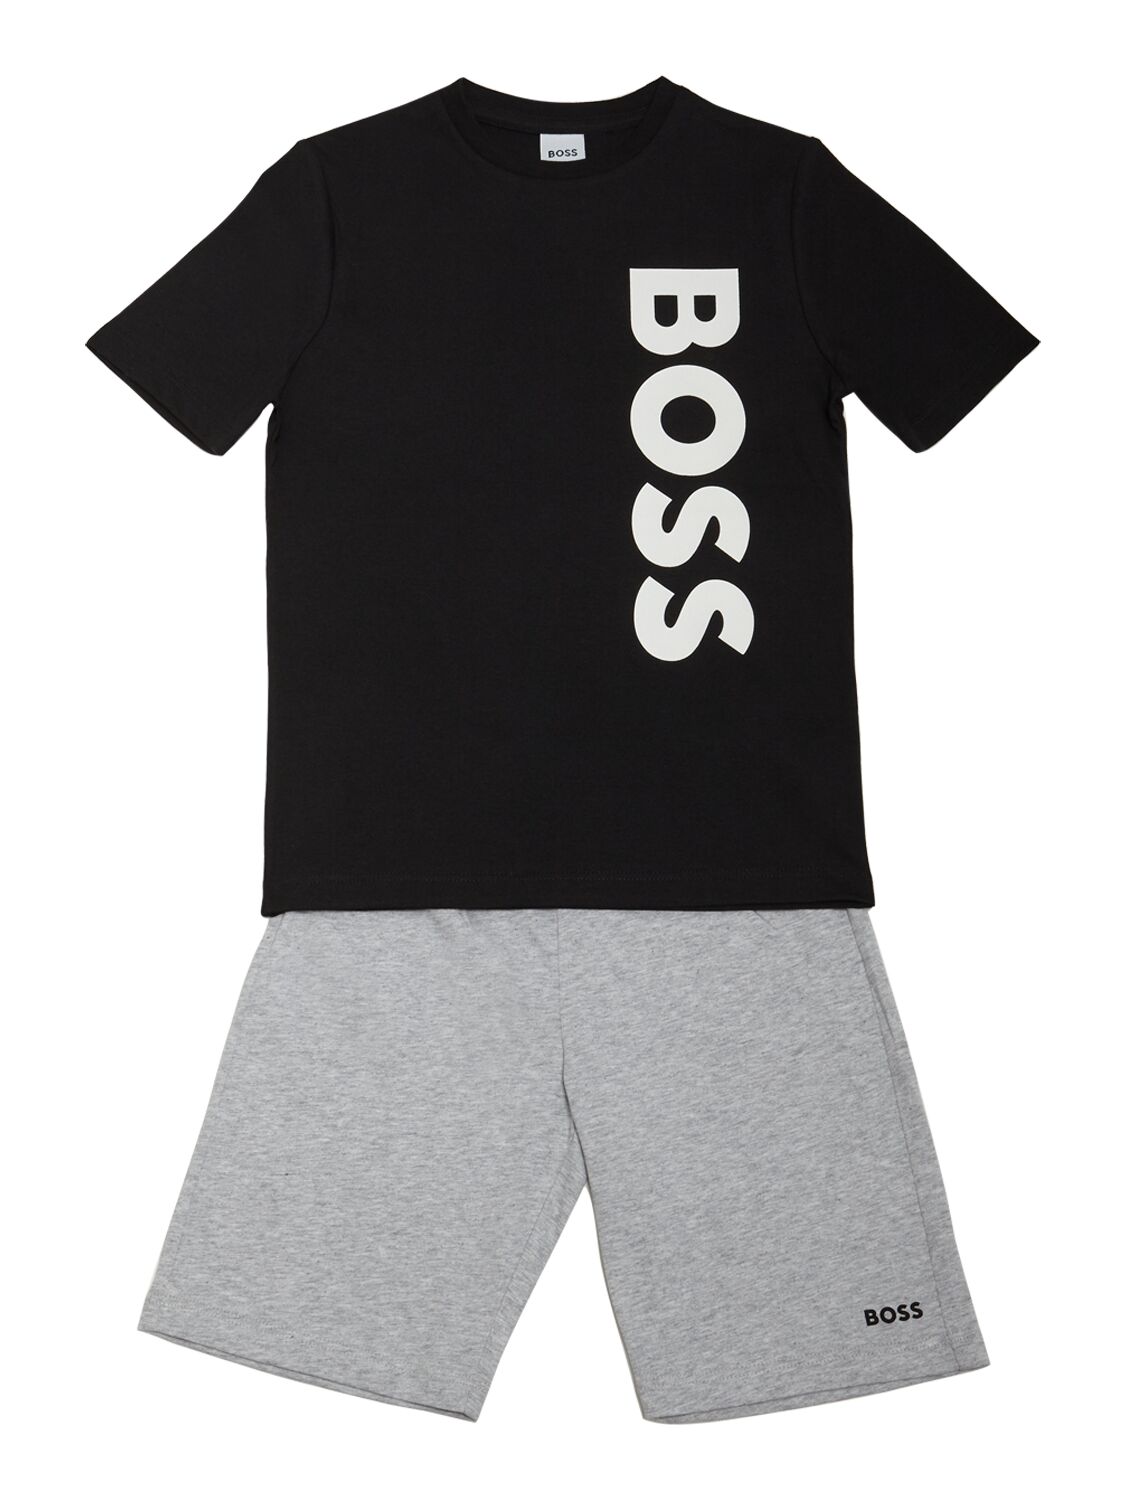 Hugo Boss Kids' Cotton Jersey T-shirt & Shorts In Black,grey